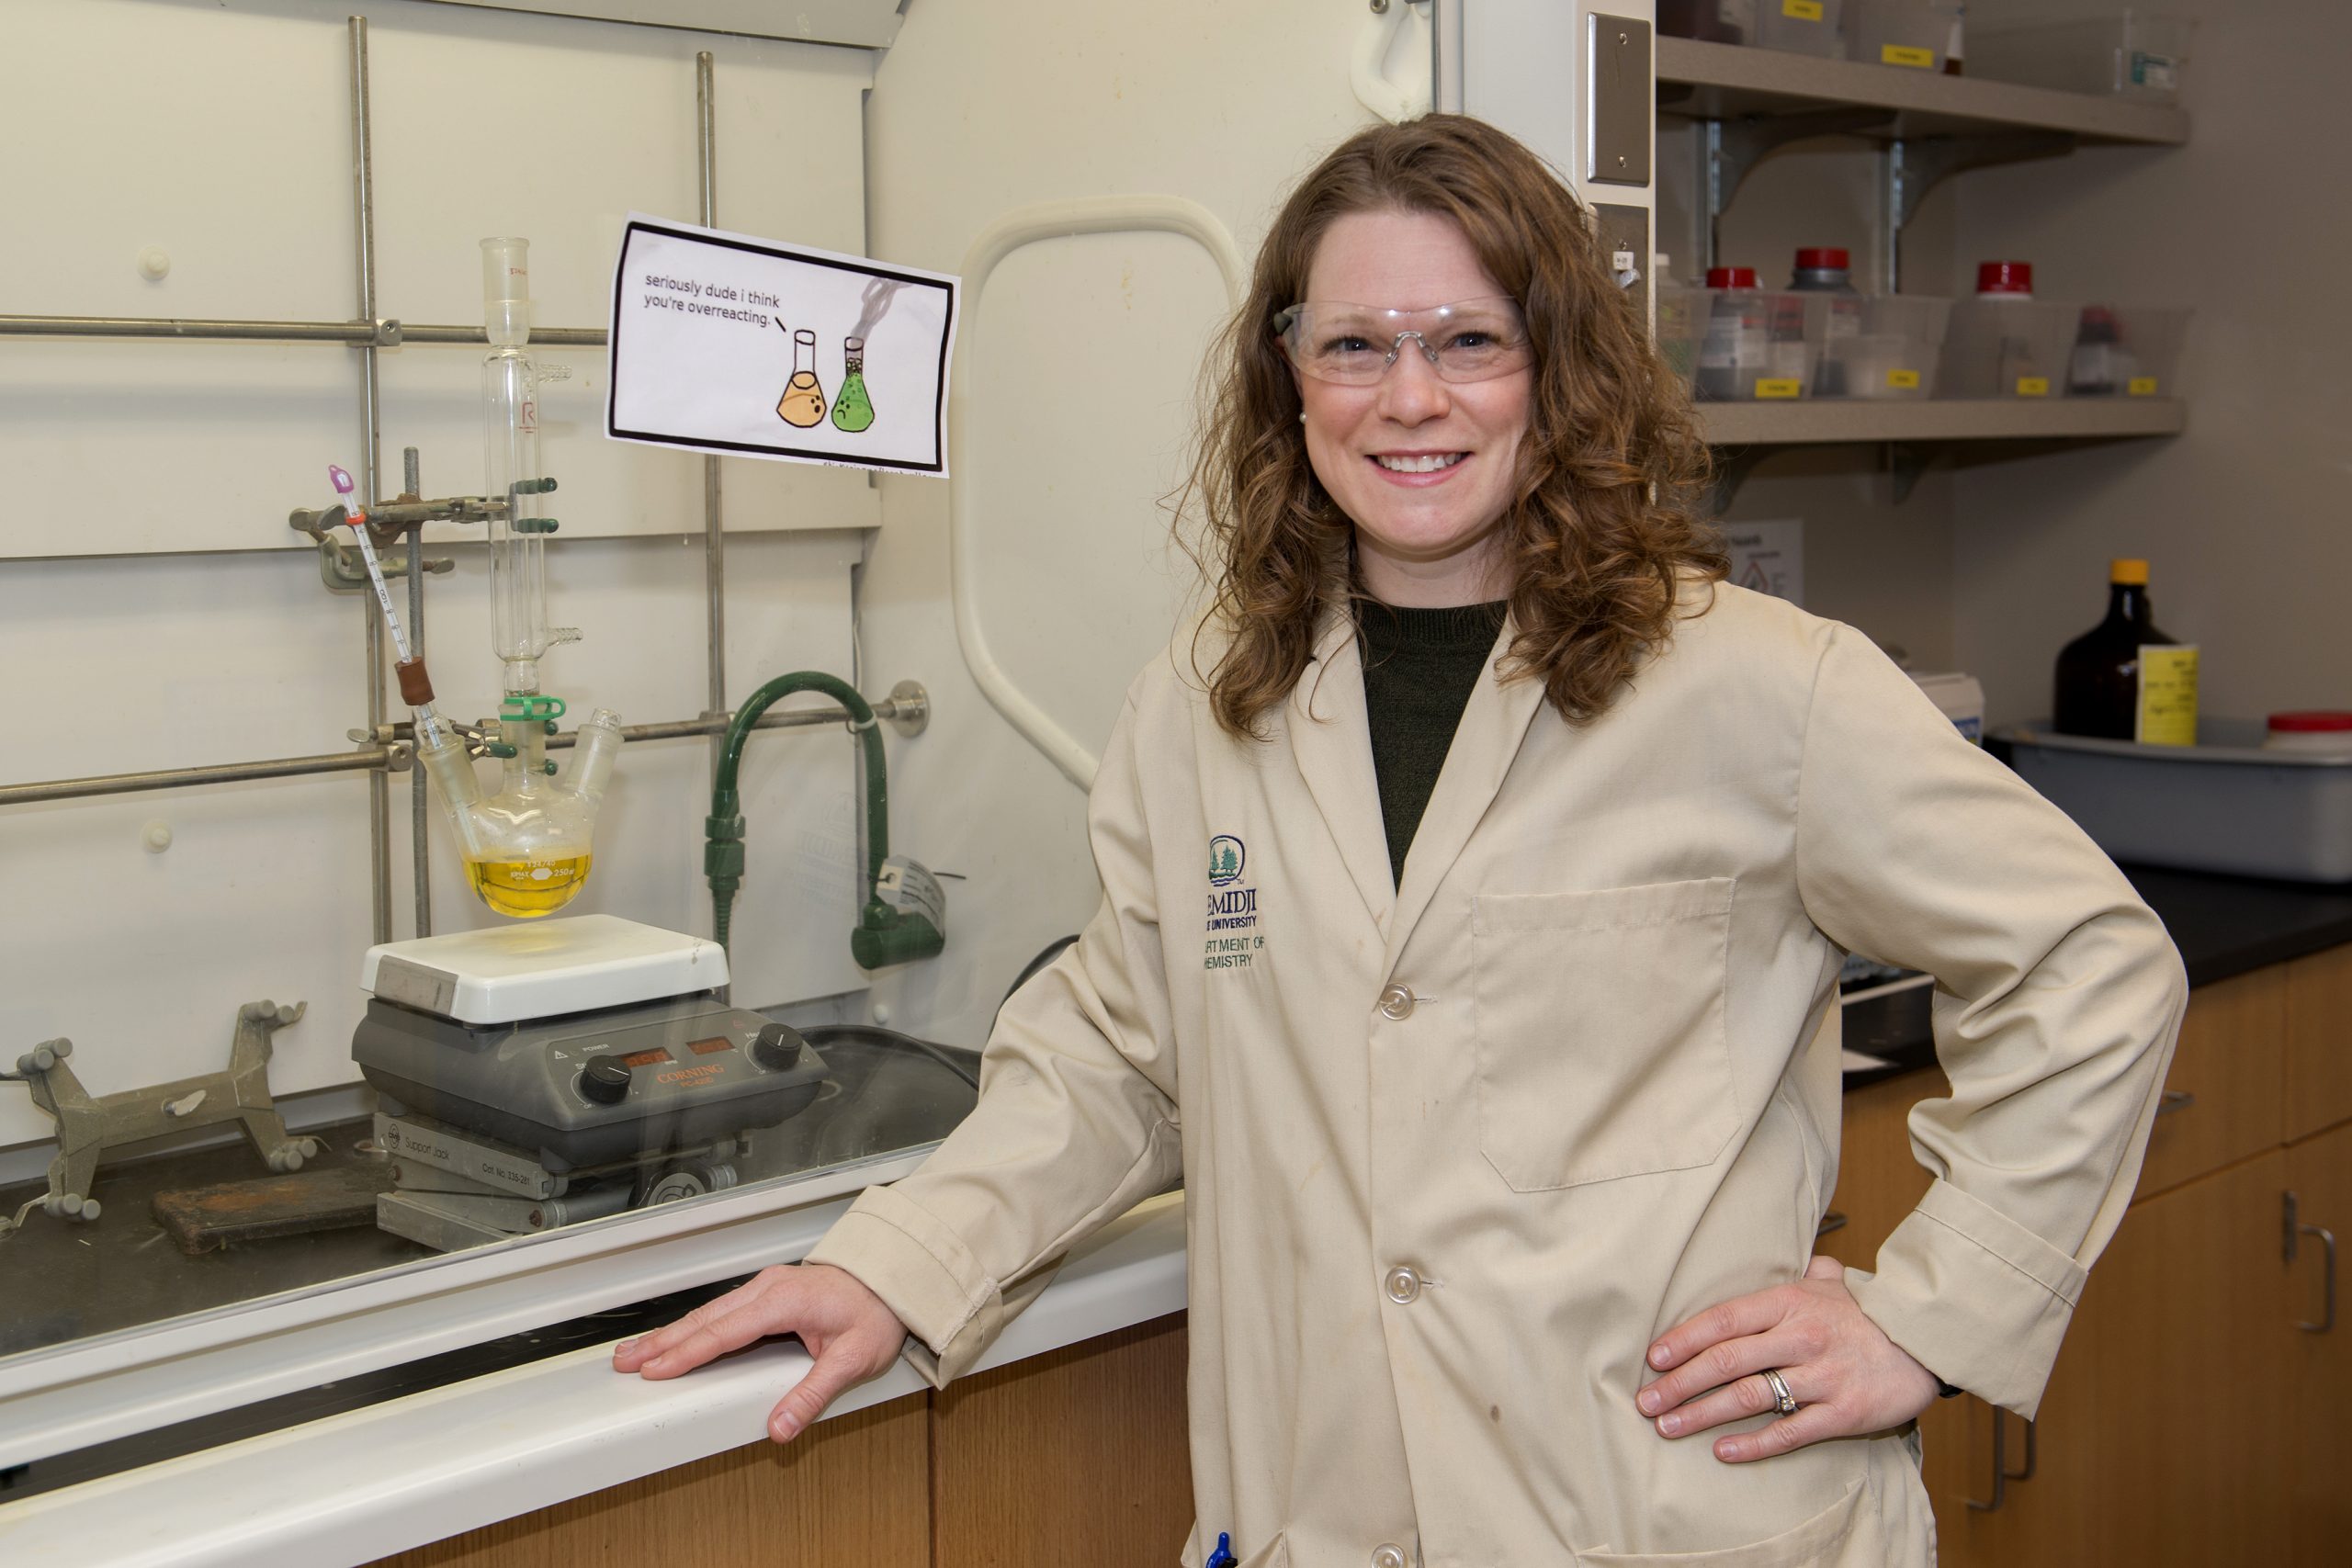 Dr. Katie Peterson, Chemistry professor at Bemidji State University